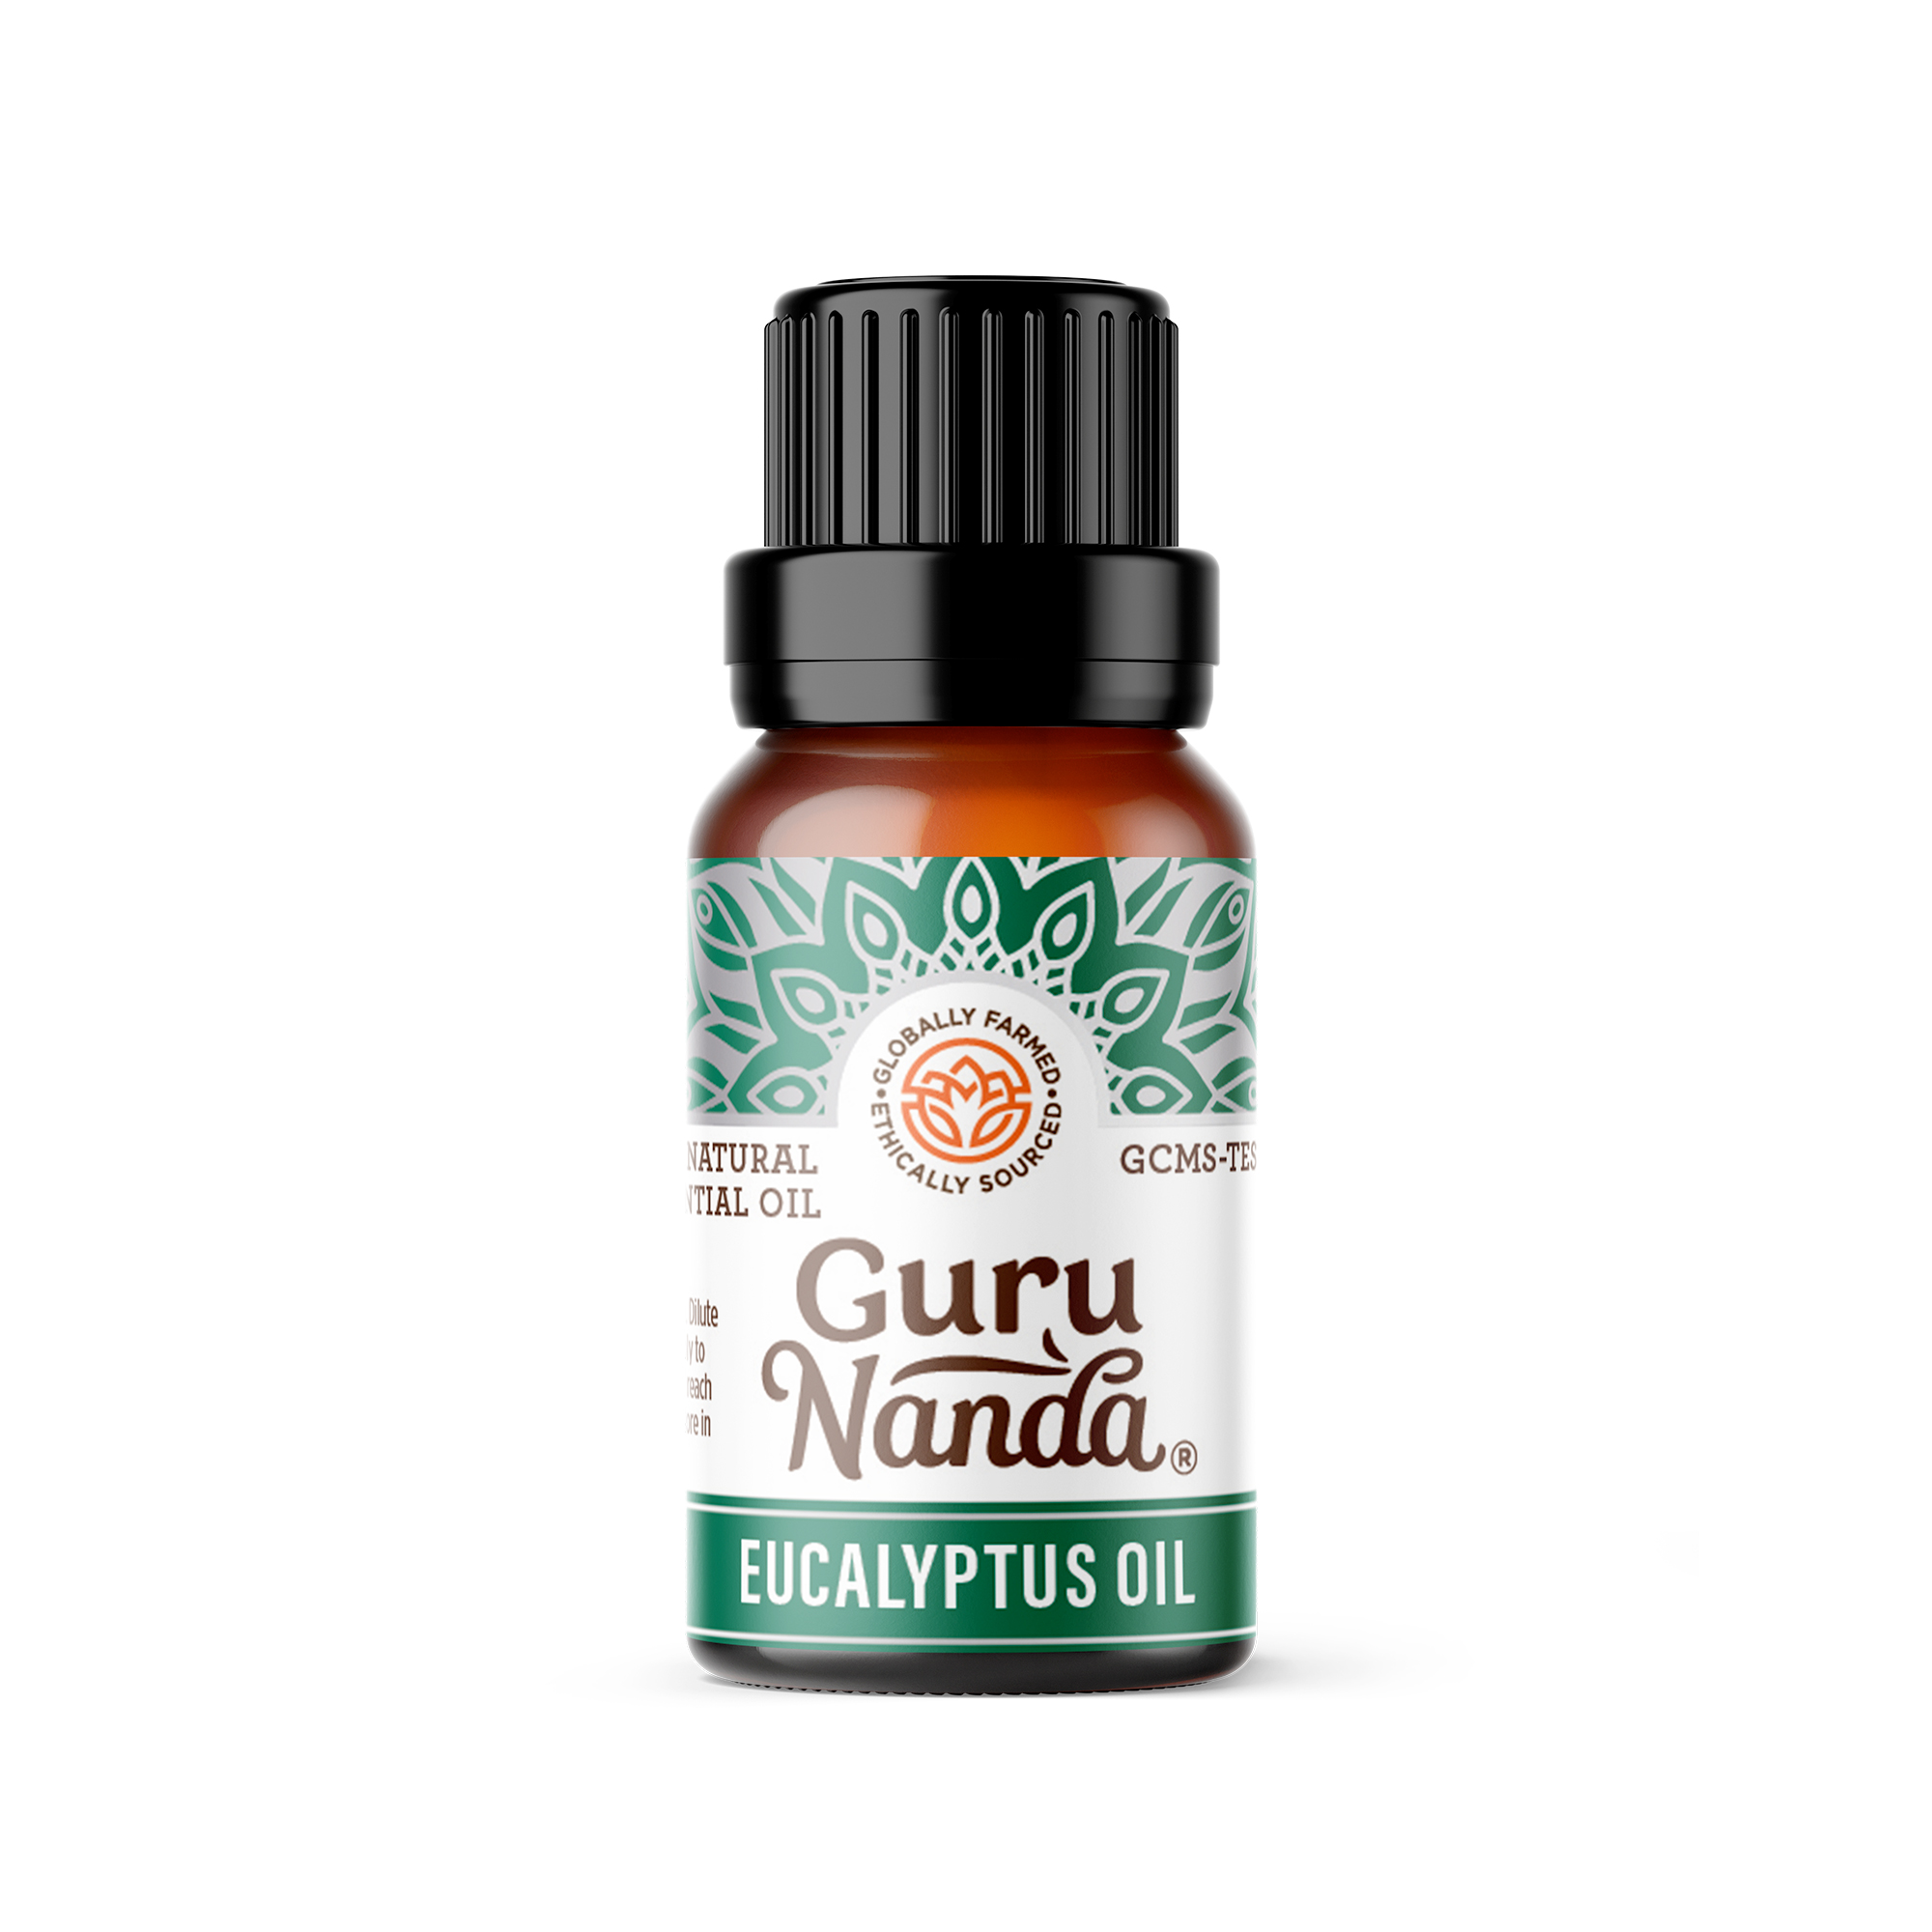 GuruNanda 100% Pure & Natural Eucalyptus Essential Oil for Aromatherapy & Diffuser - 15ml - image 1 of 8